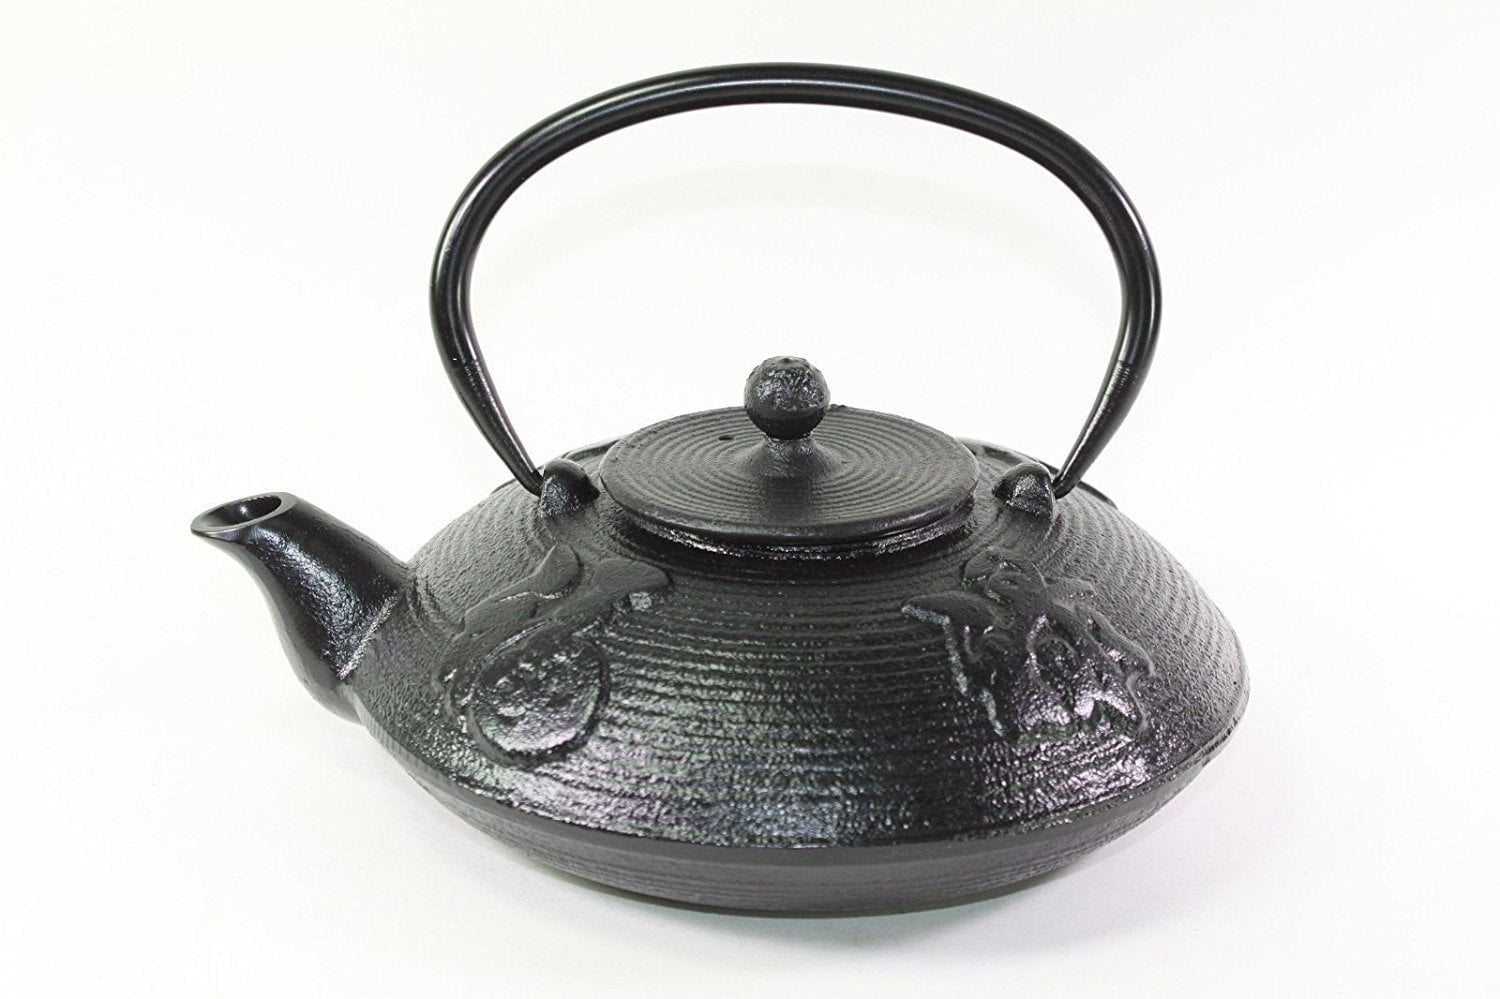 Velaze 37 oz. Japanese Antique Small Dot Cast Iron Teapot with Warmer  VLZ-TP02 - The Home Depot